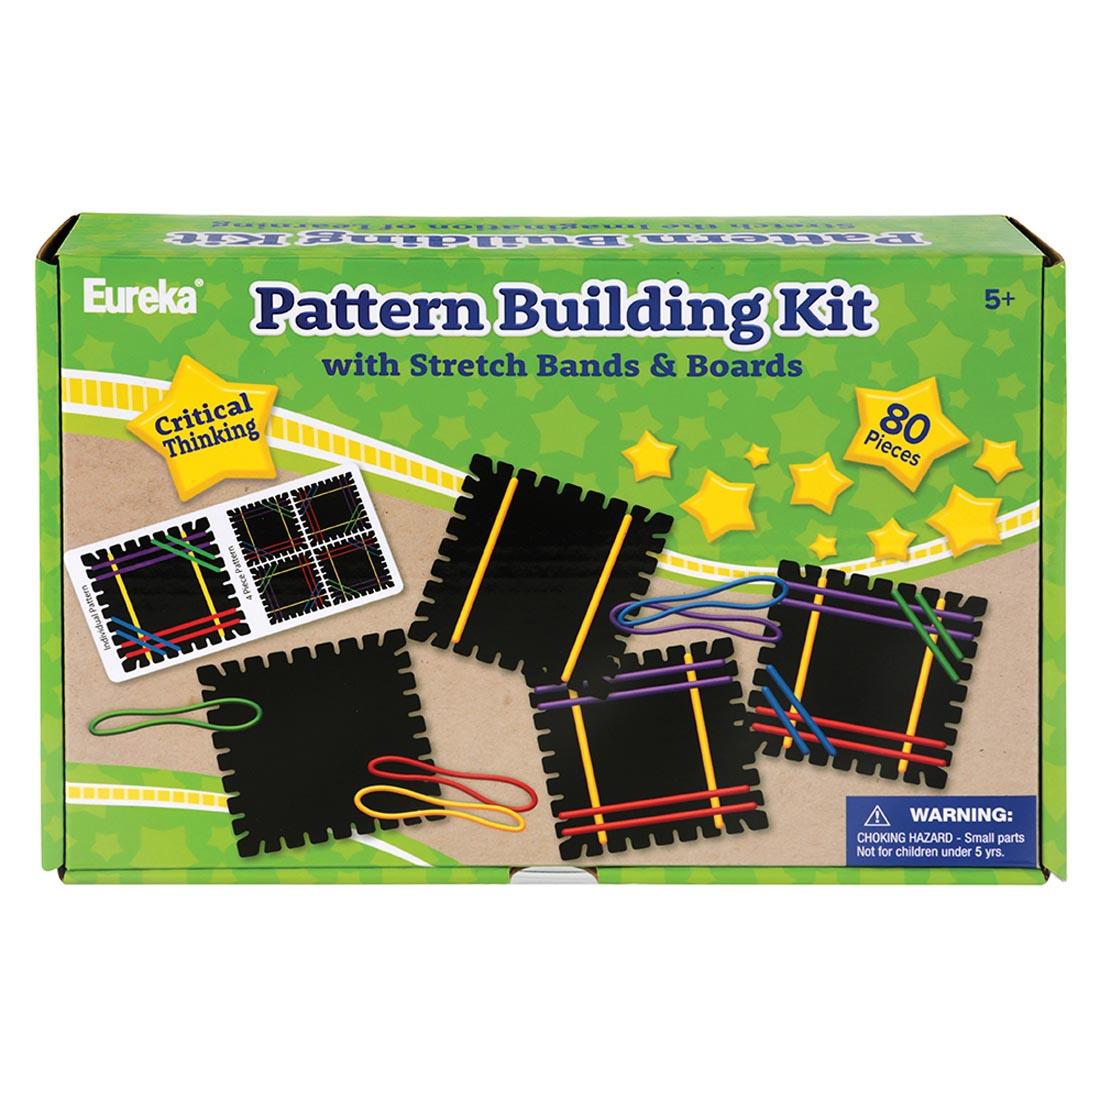 Pattern Building Kit by Eureka